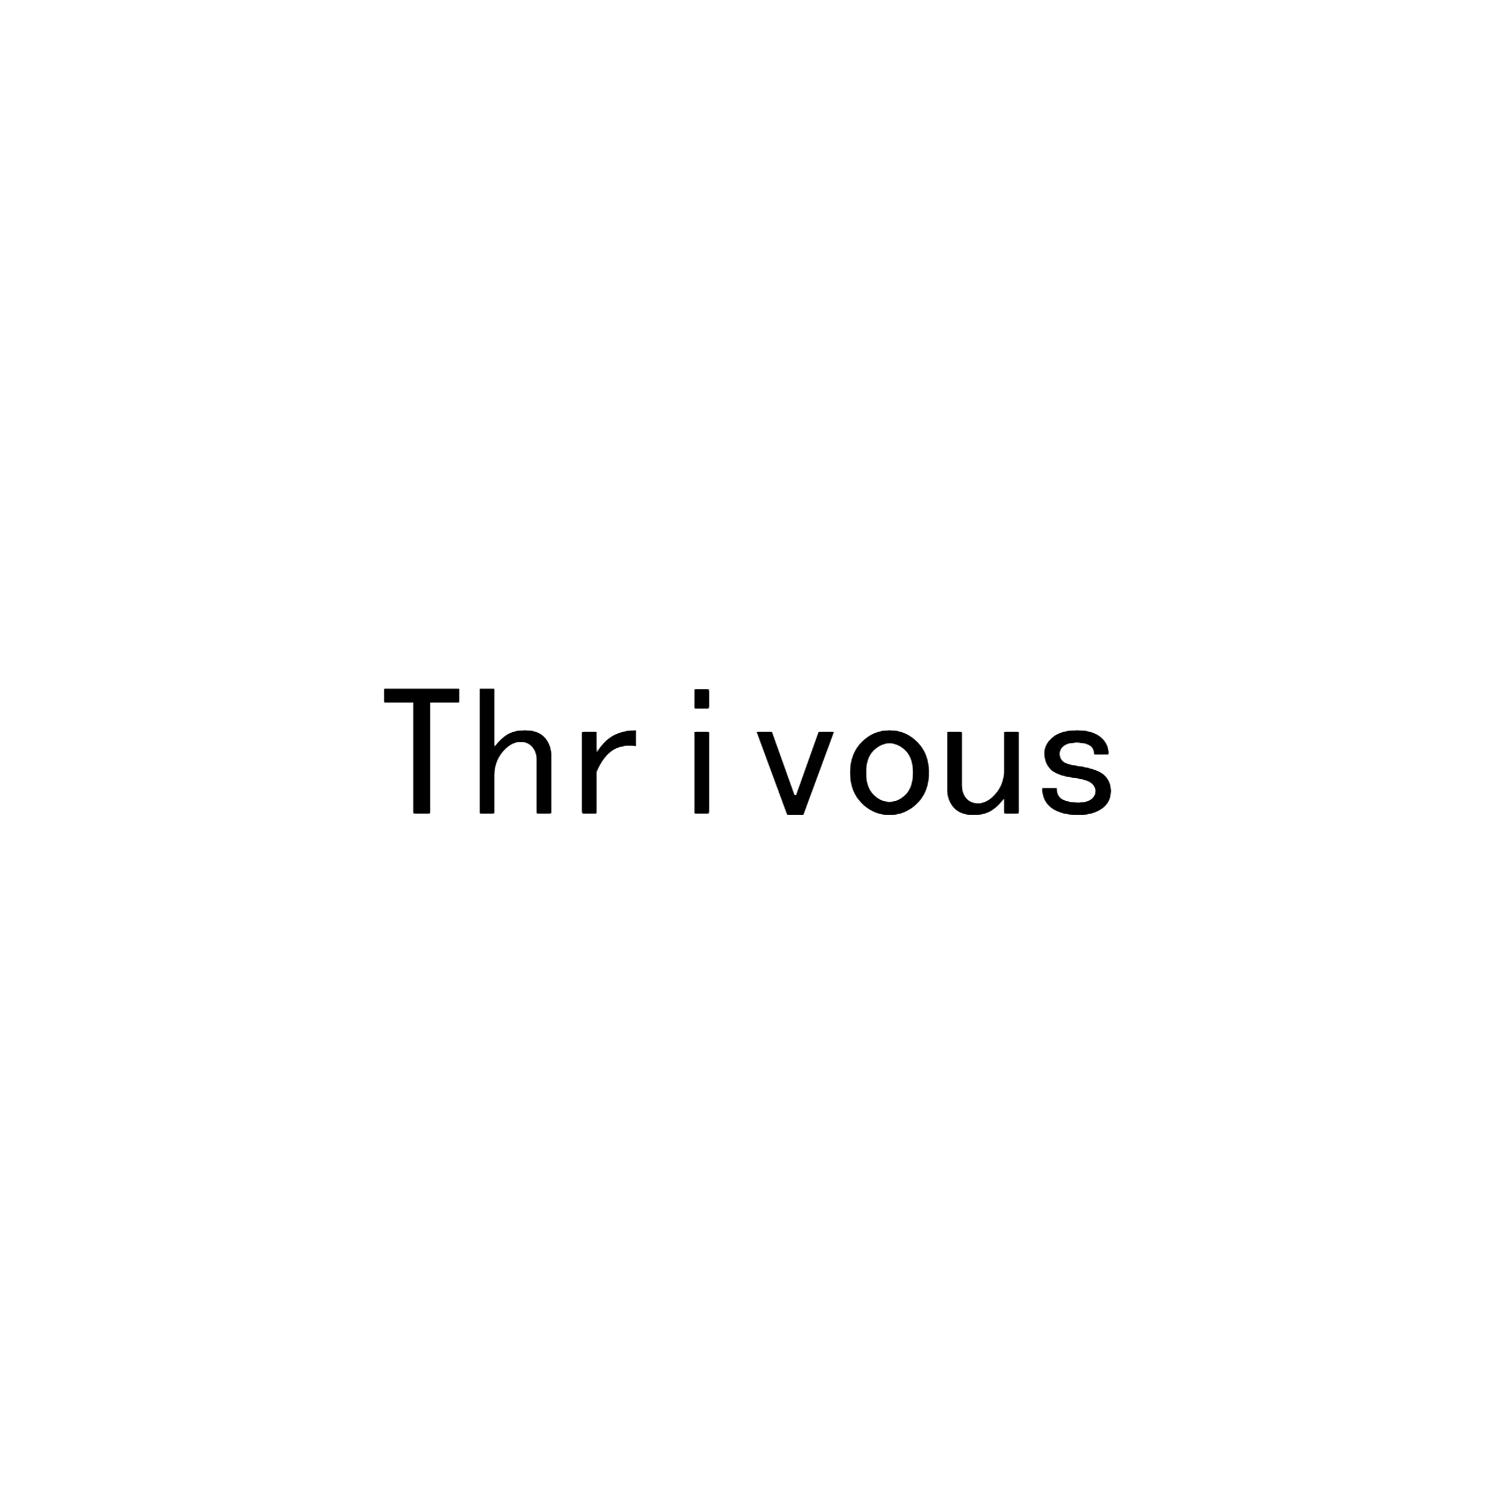 THRIVOUS